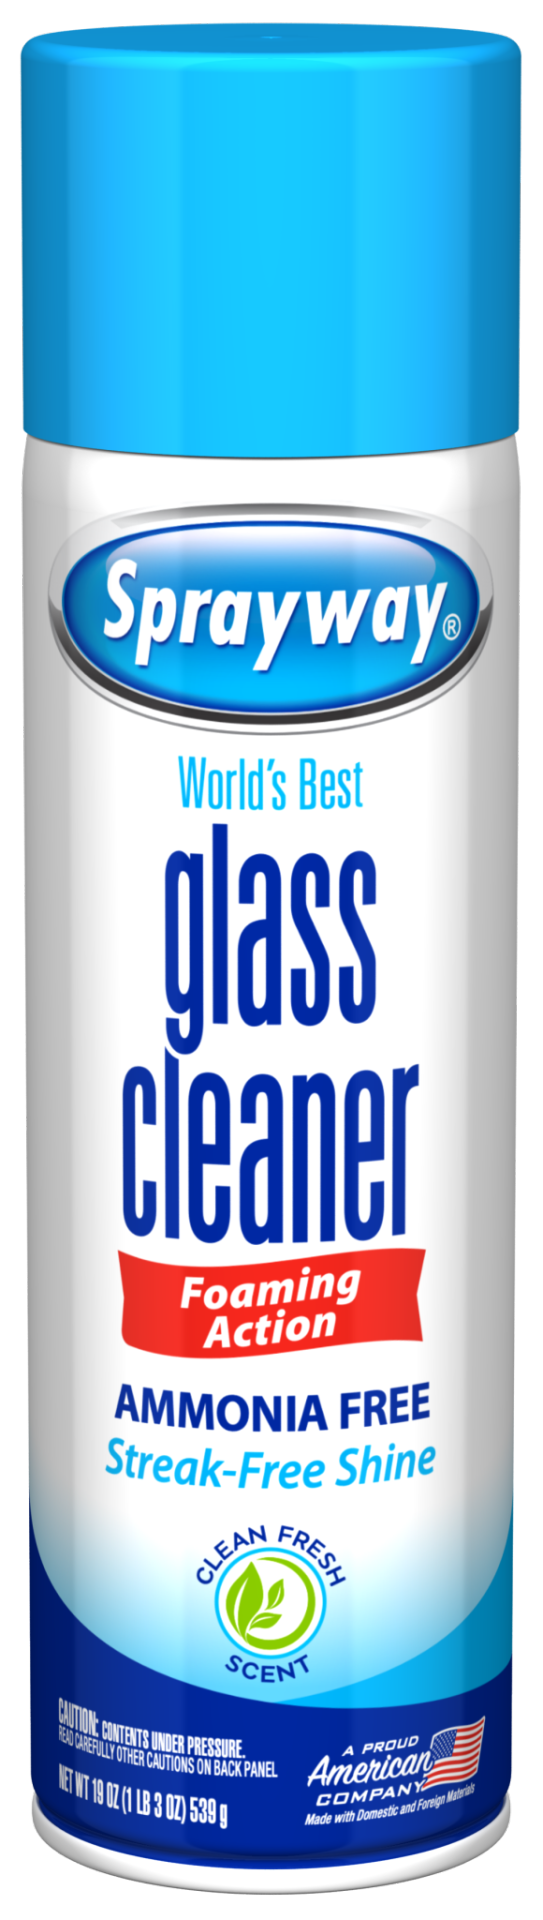 Glass Cleaner Sprayway 23 Oz.